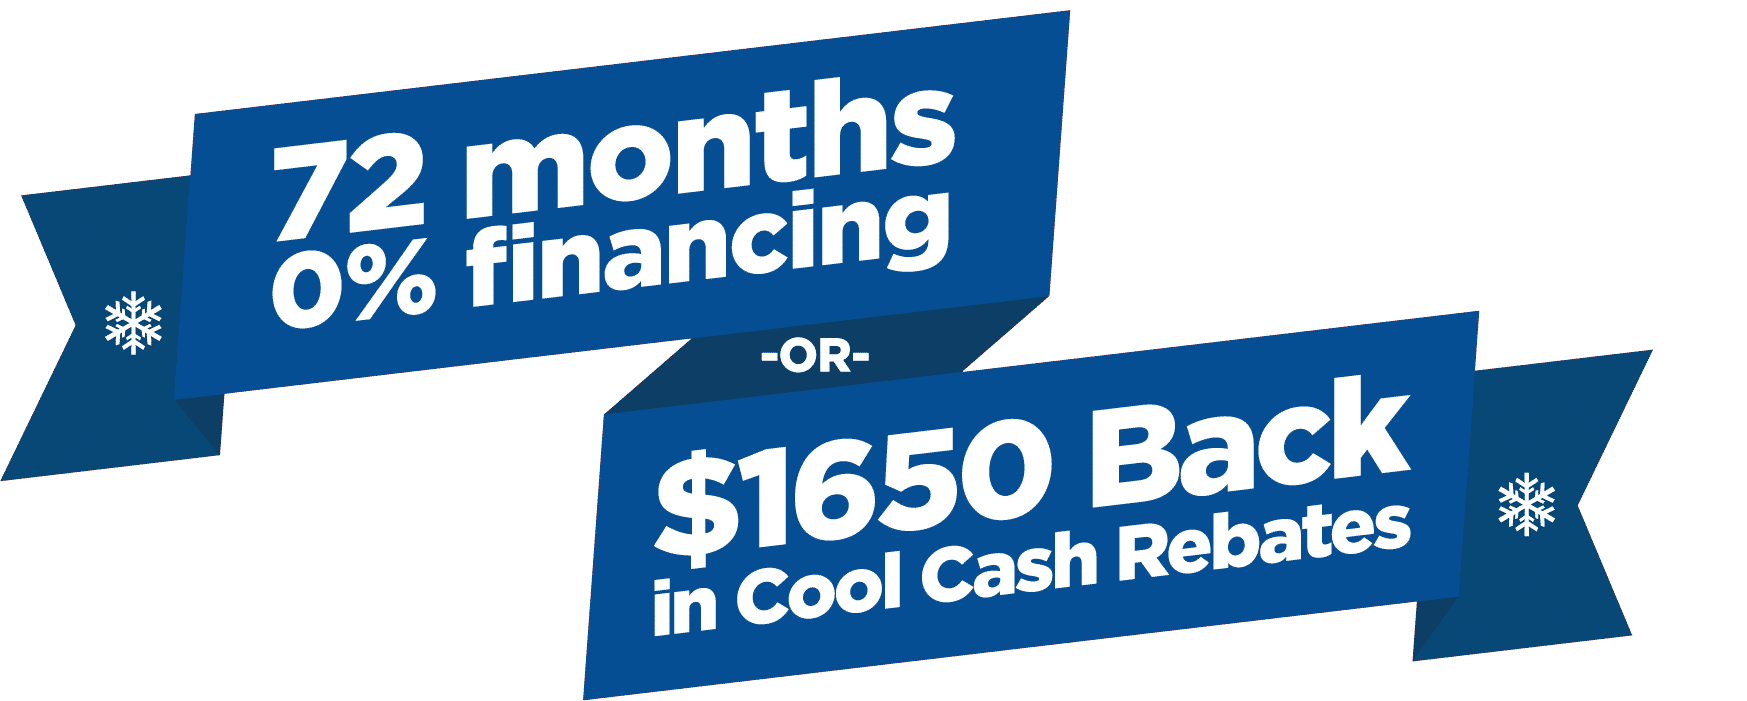 carrier-cool-cash-rebates-cash-rebates-air-conditioning-services